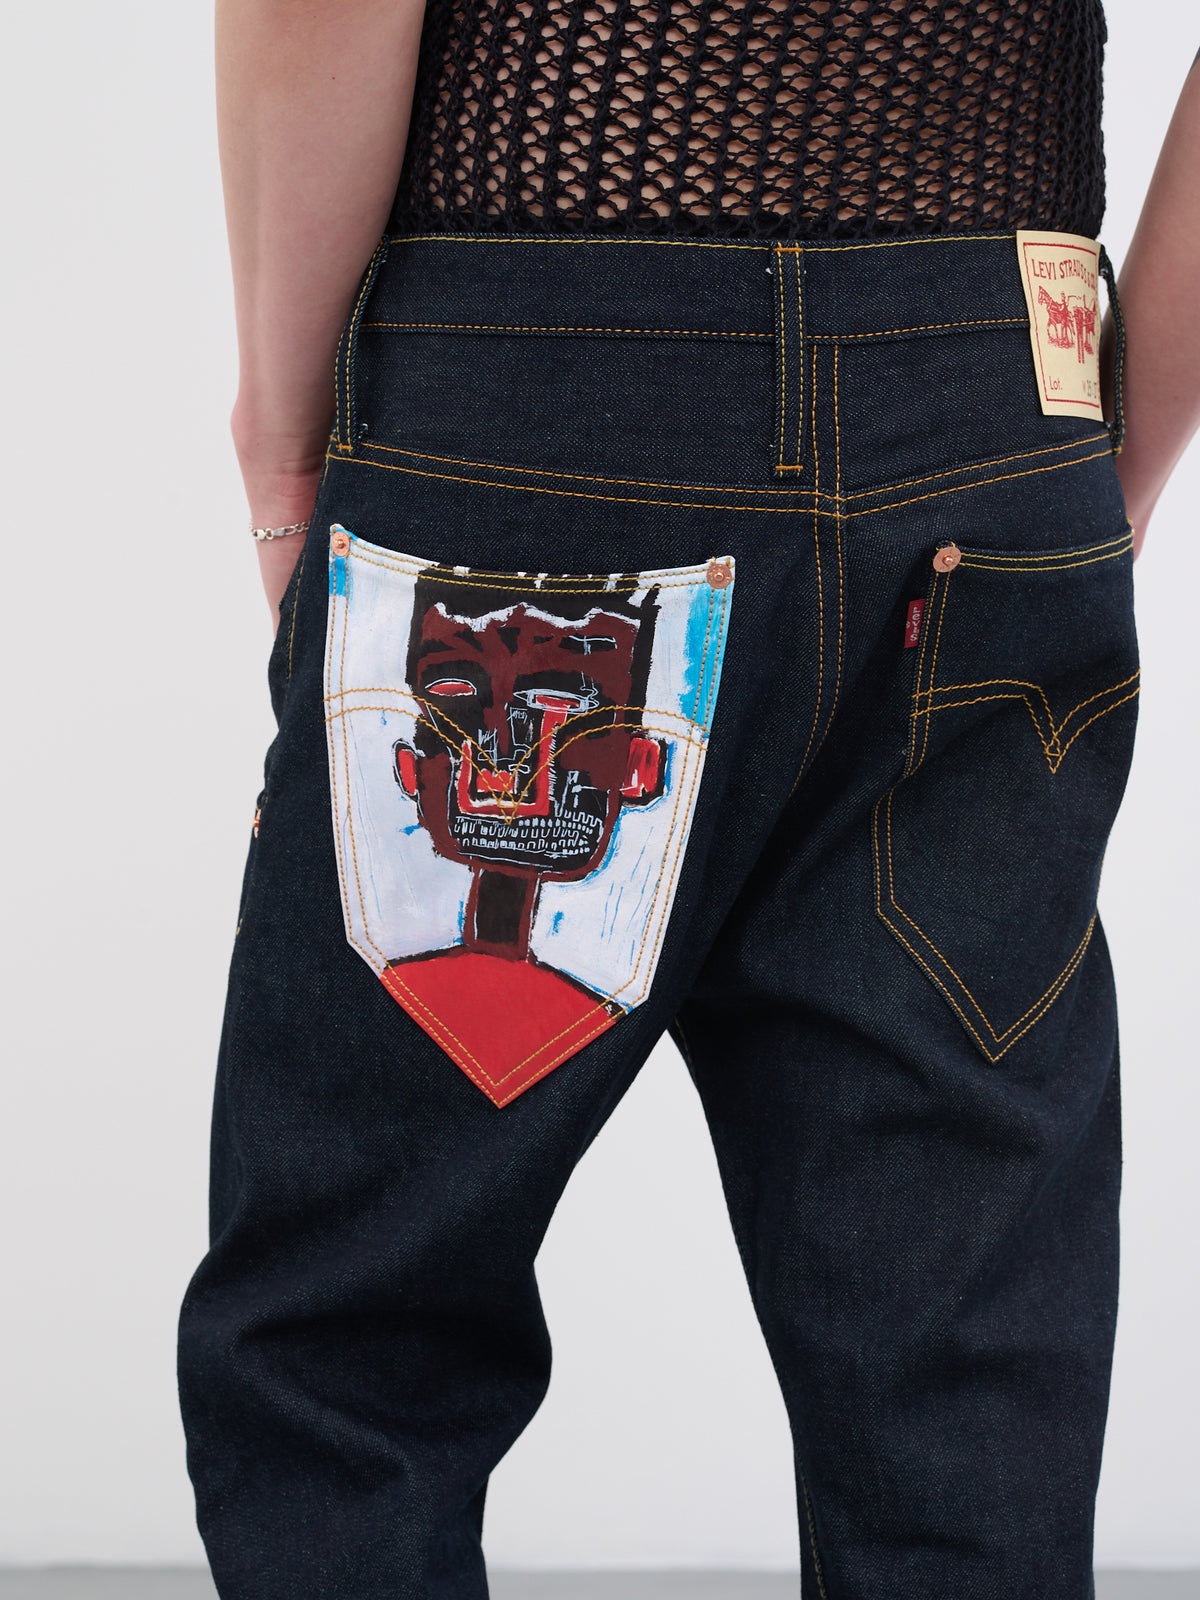 Basquiat Levi's Jeans (WK-P208-051-INDIGO-WHITE-BROWN)